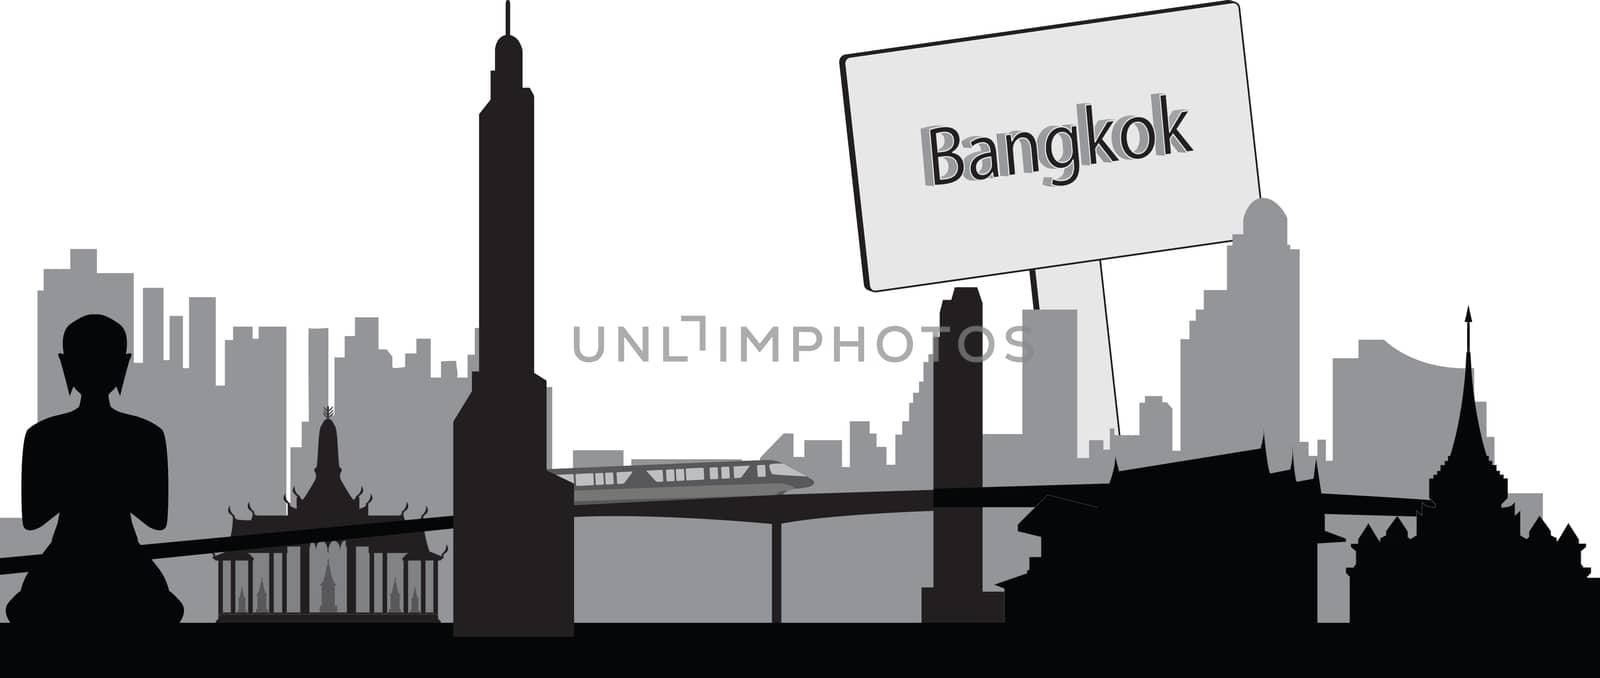 Skyline capital Thailand Bangkok by compuinfoto